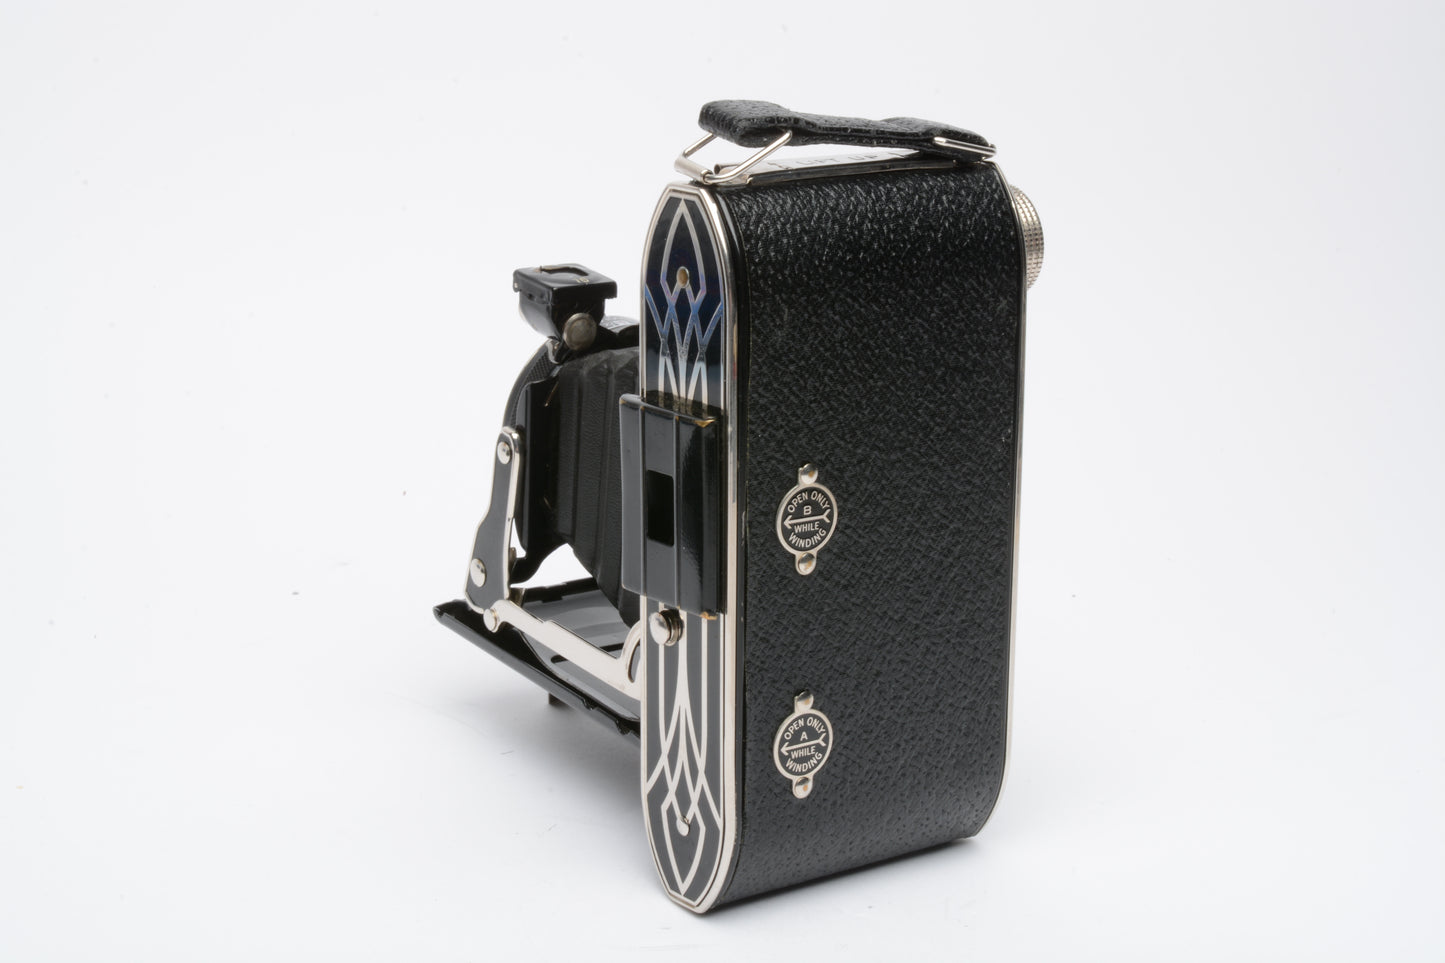 Vintage Agfa PB-20 Tripar Art-Deco camera w/case, shutter works!, very clean